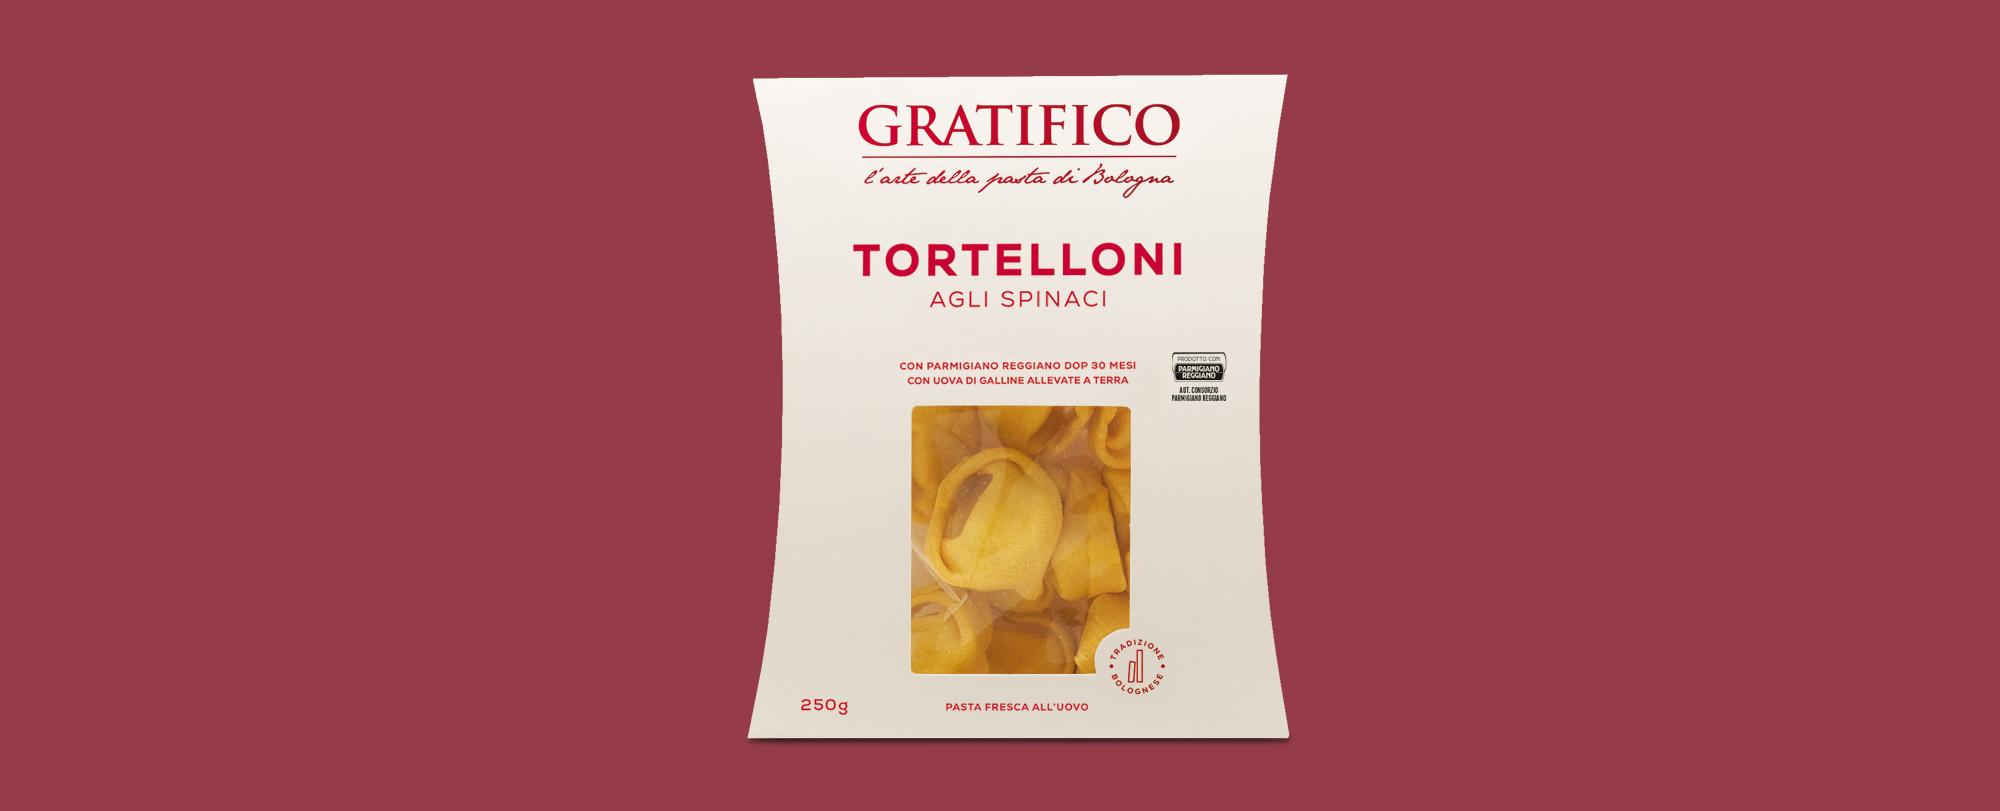 Tortelloni_spinaci-pack-mockup